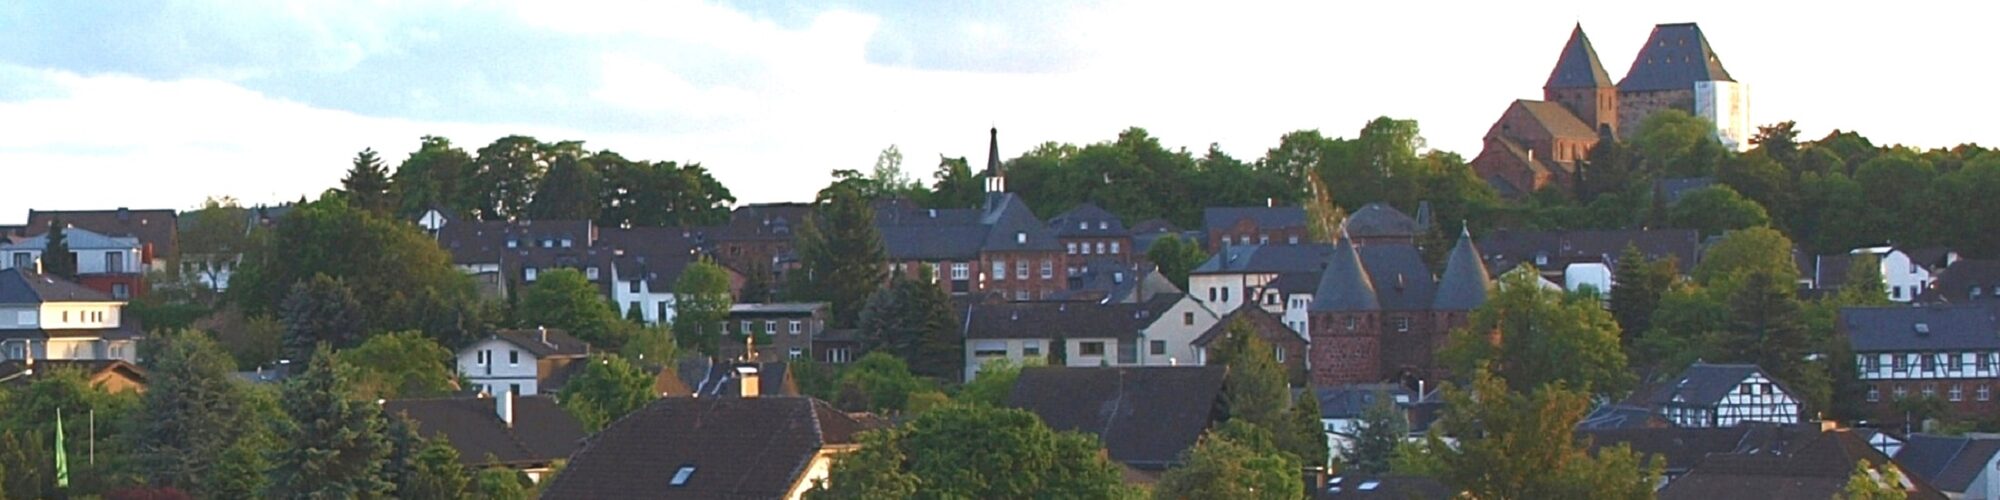 Blick auf die historische Altstadt Nideggen